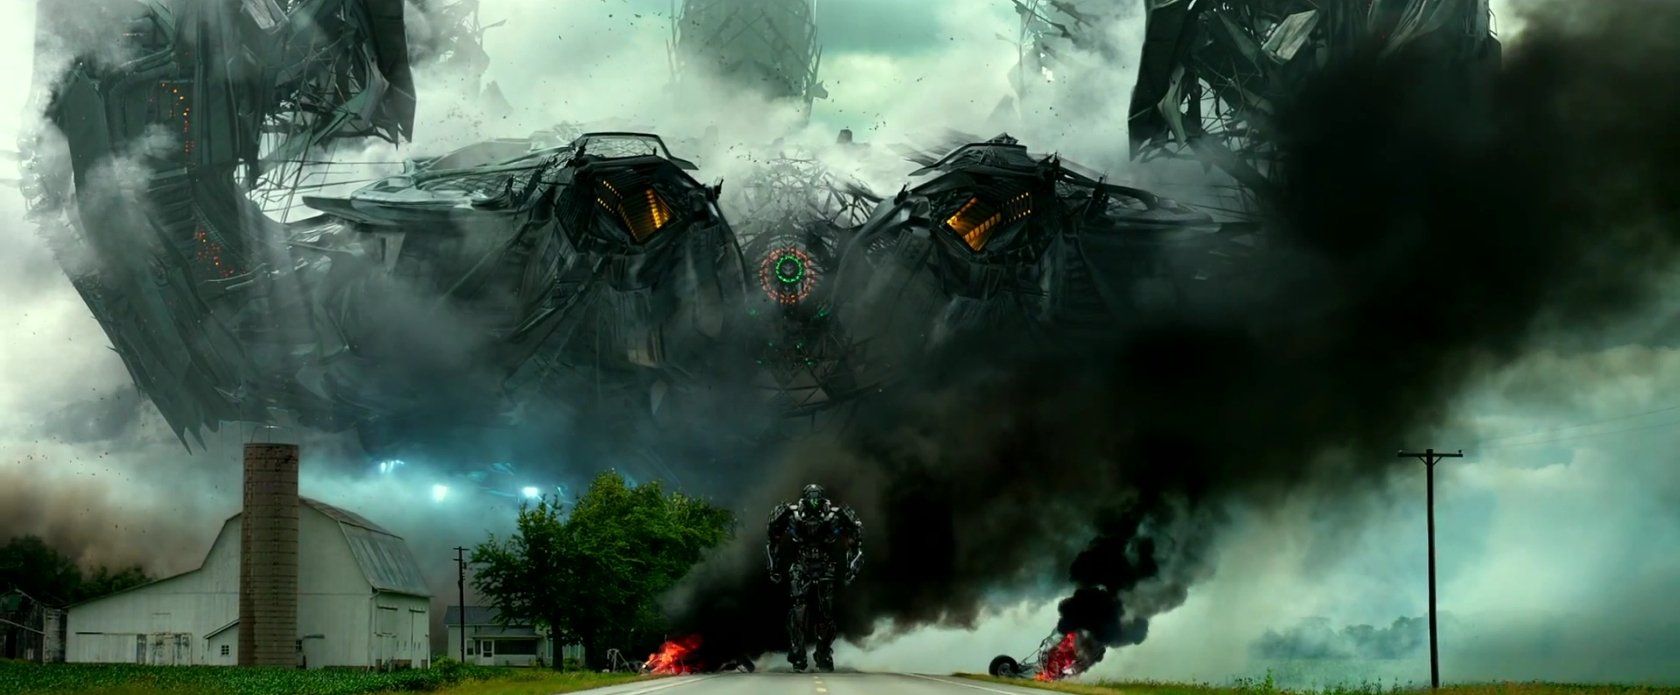 Transformers 4 : la Bande Annonce + 4 affiches exclusives #3